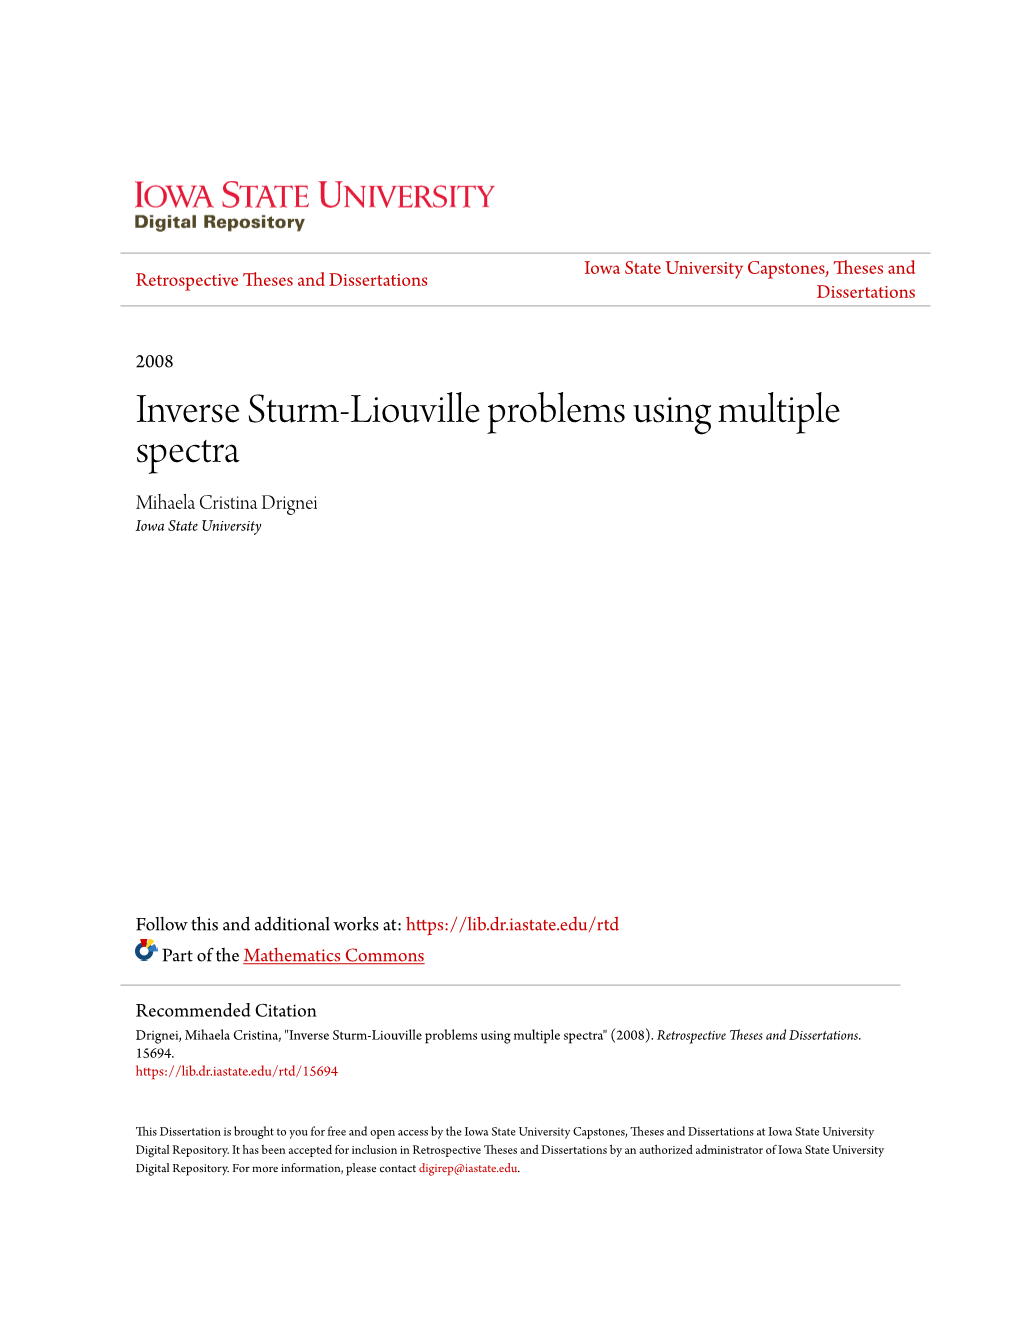 Inverse Sturm-Liouville Problems Using Multiple Spectra Mihaela Cristina Drignei Iowa State University